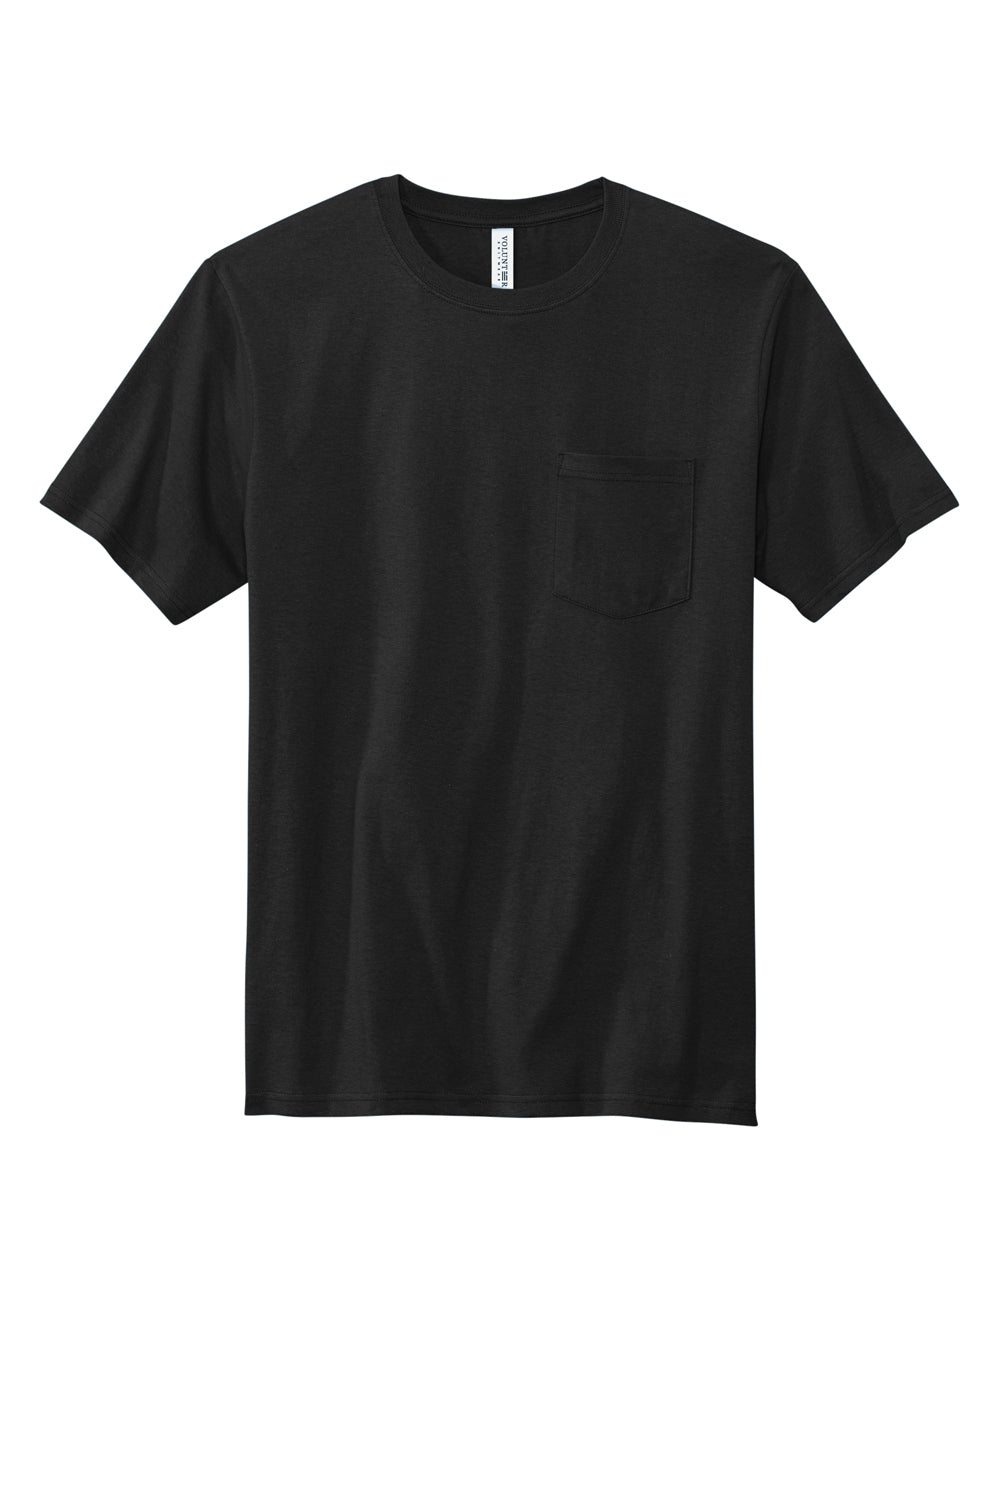 Volunteer Knitwear VL100P USA Made All American Short Sleeve Crewneck T-Shirt w/ Pocket Deep Black Flat Front